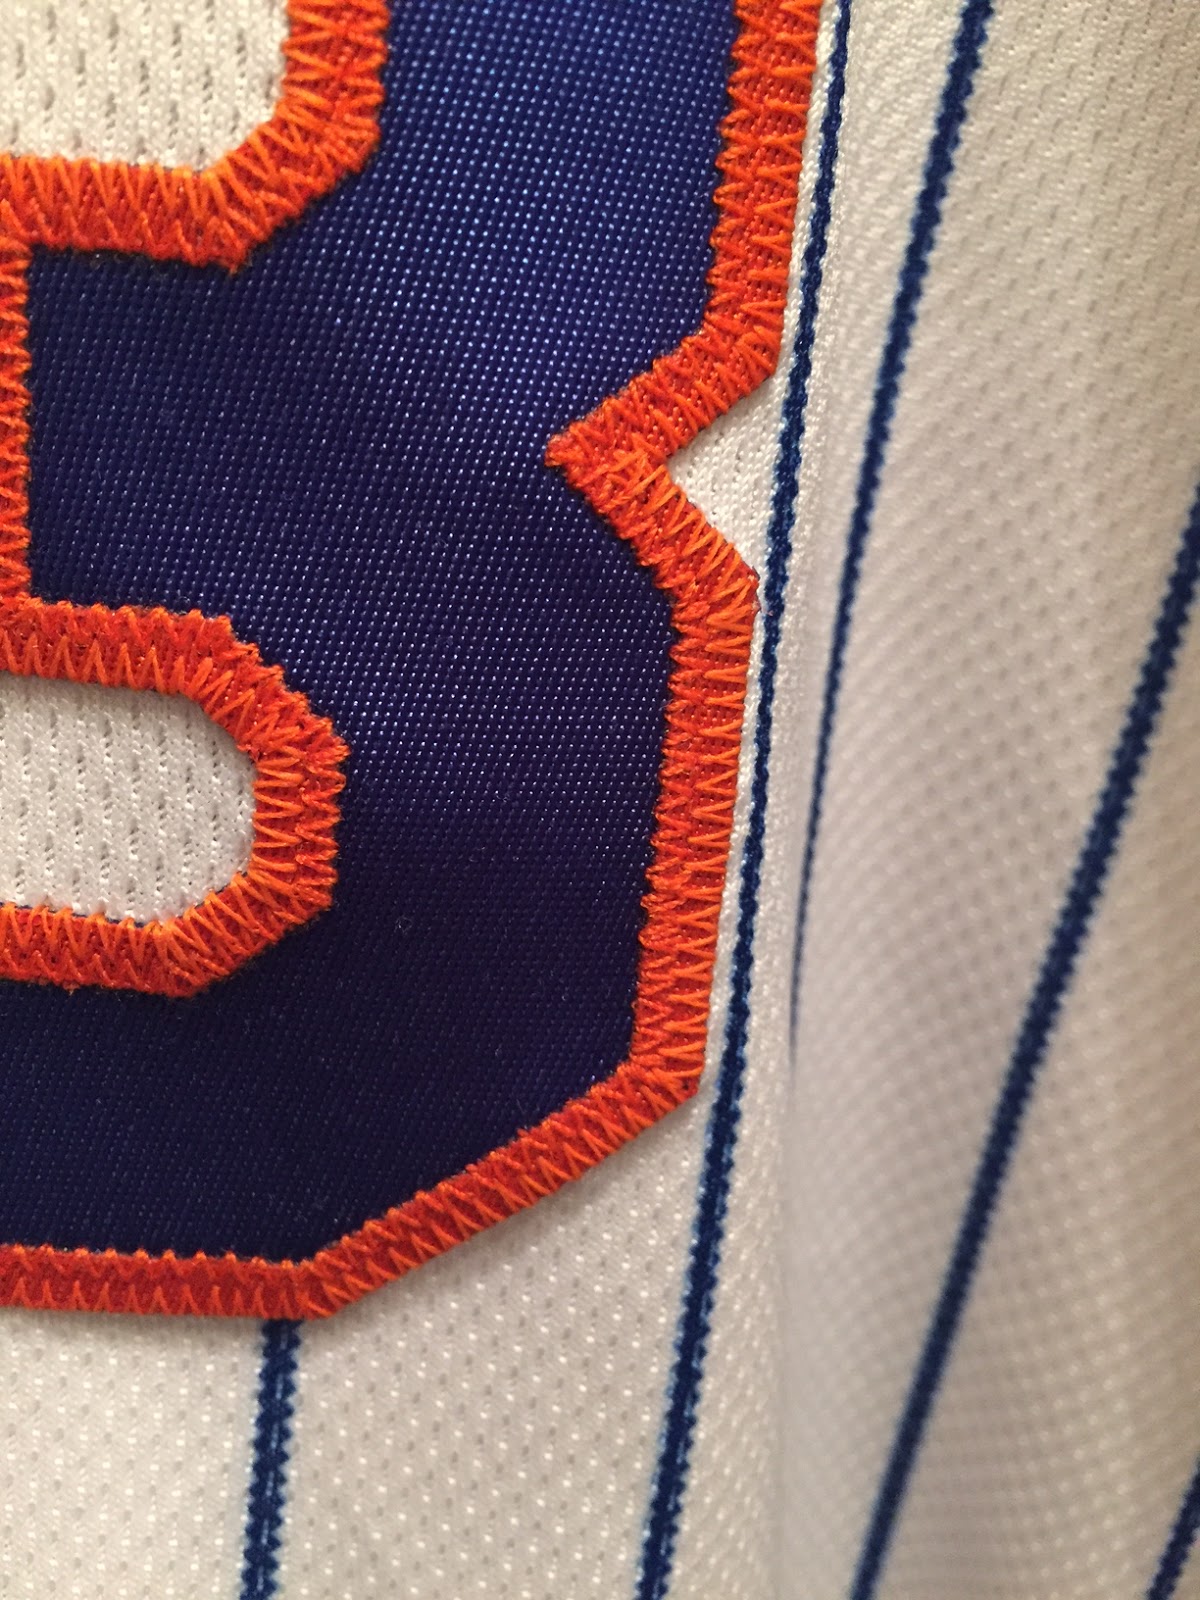 Mets Wear 1986 Throwback Uniforms – Blogging Mets